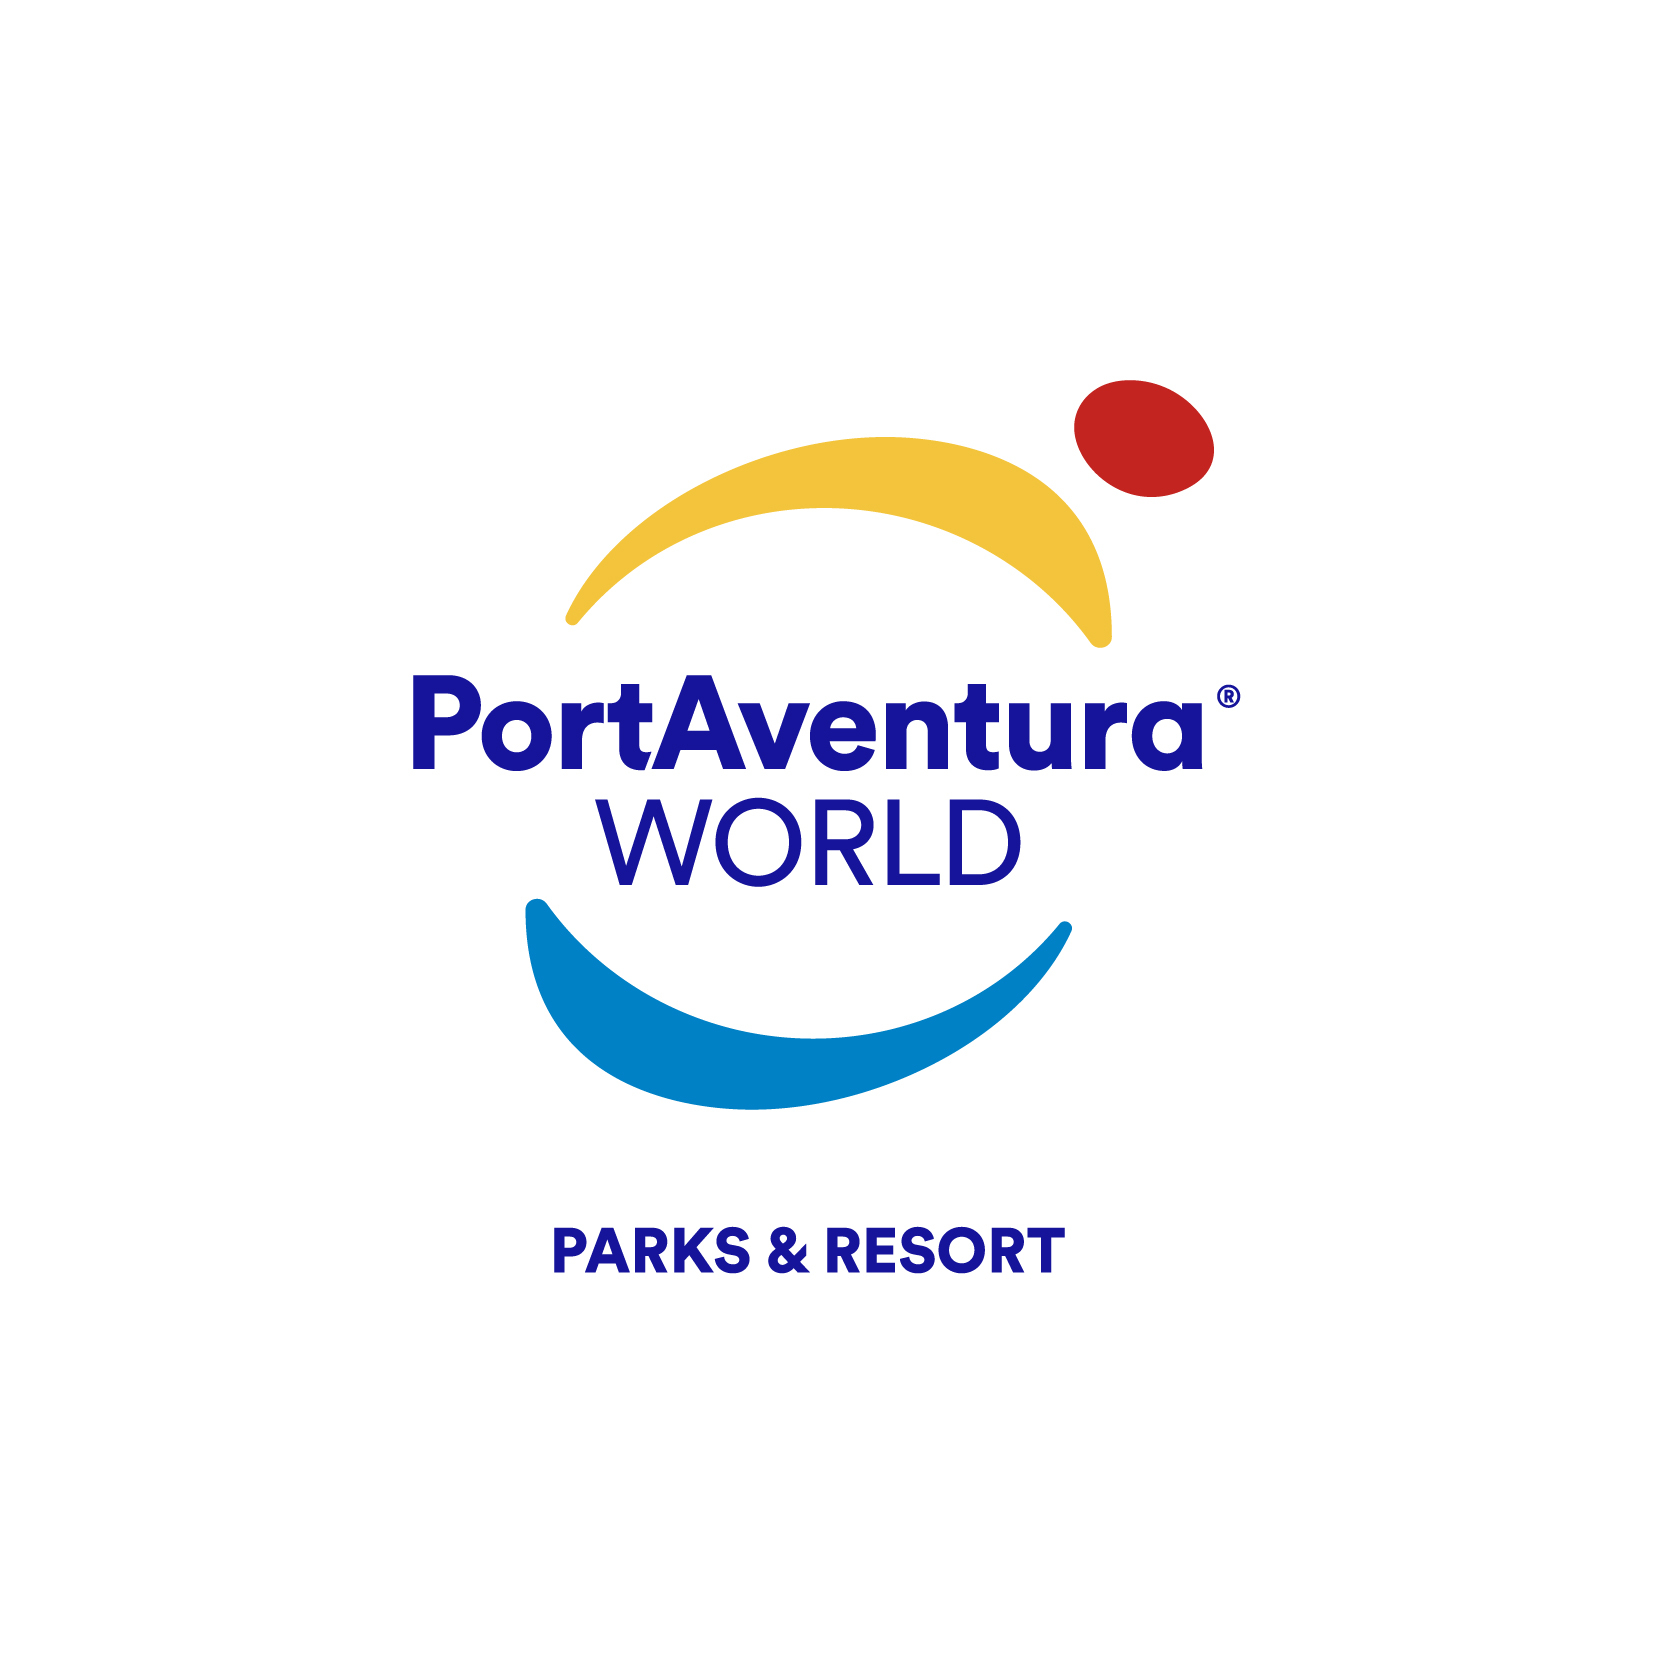 PortAventura_World_ParksResort_Brand_Master_COLOR_PLANOI_FONDO_CLARO.jpg